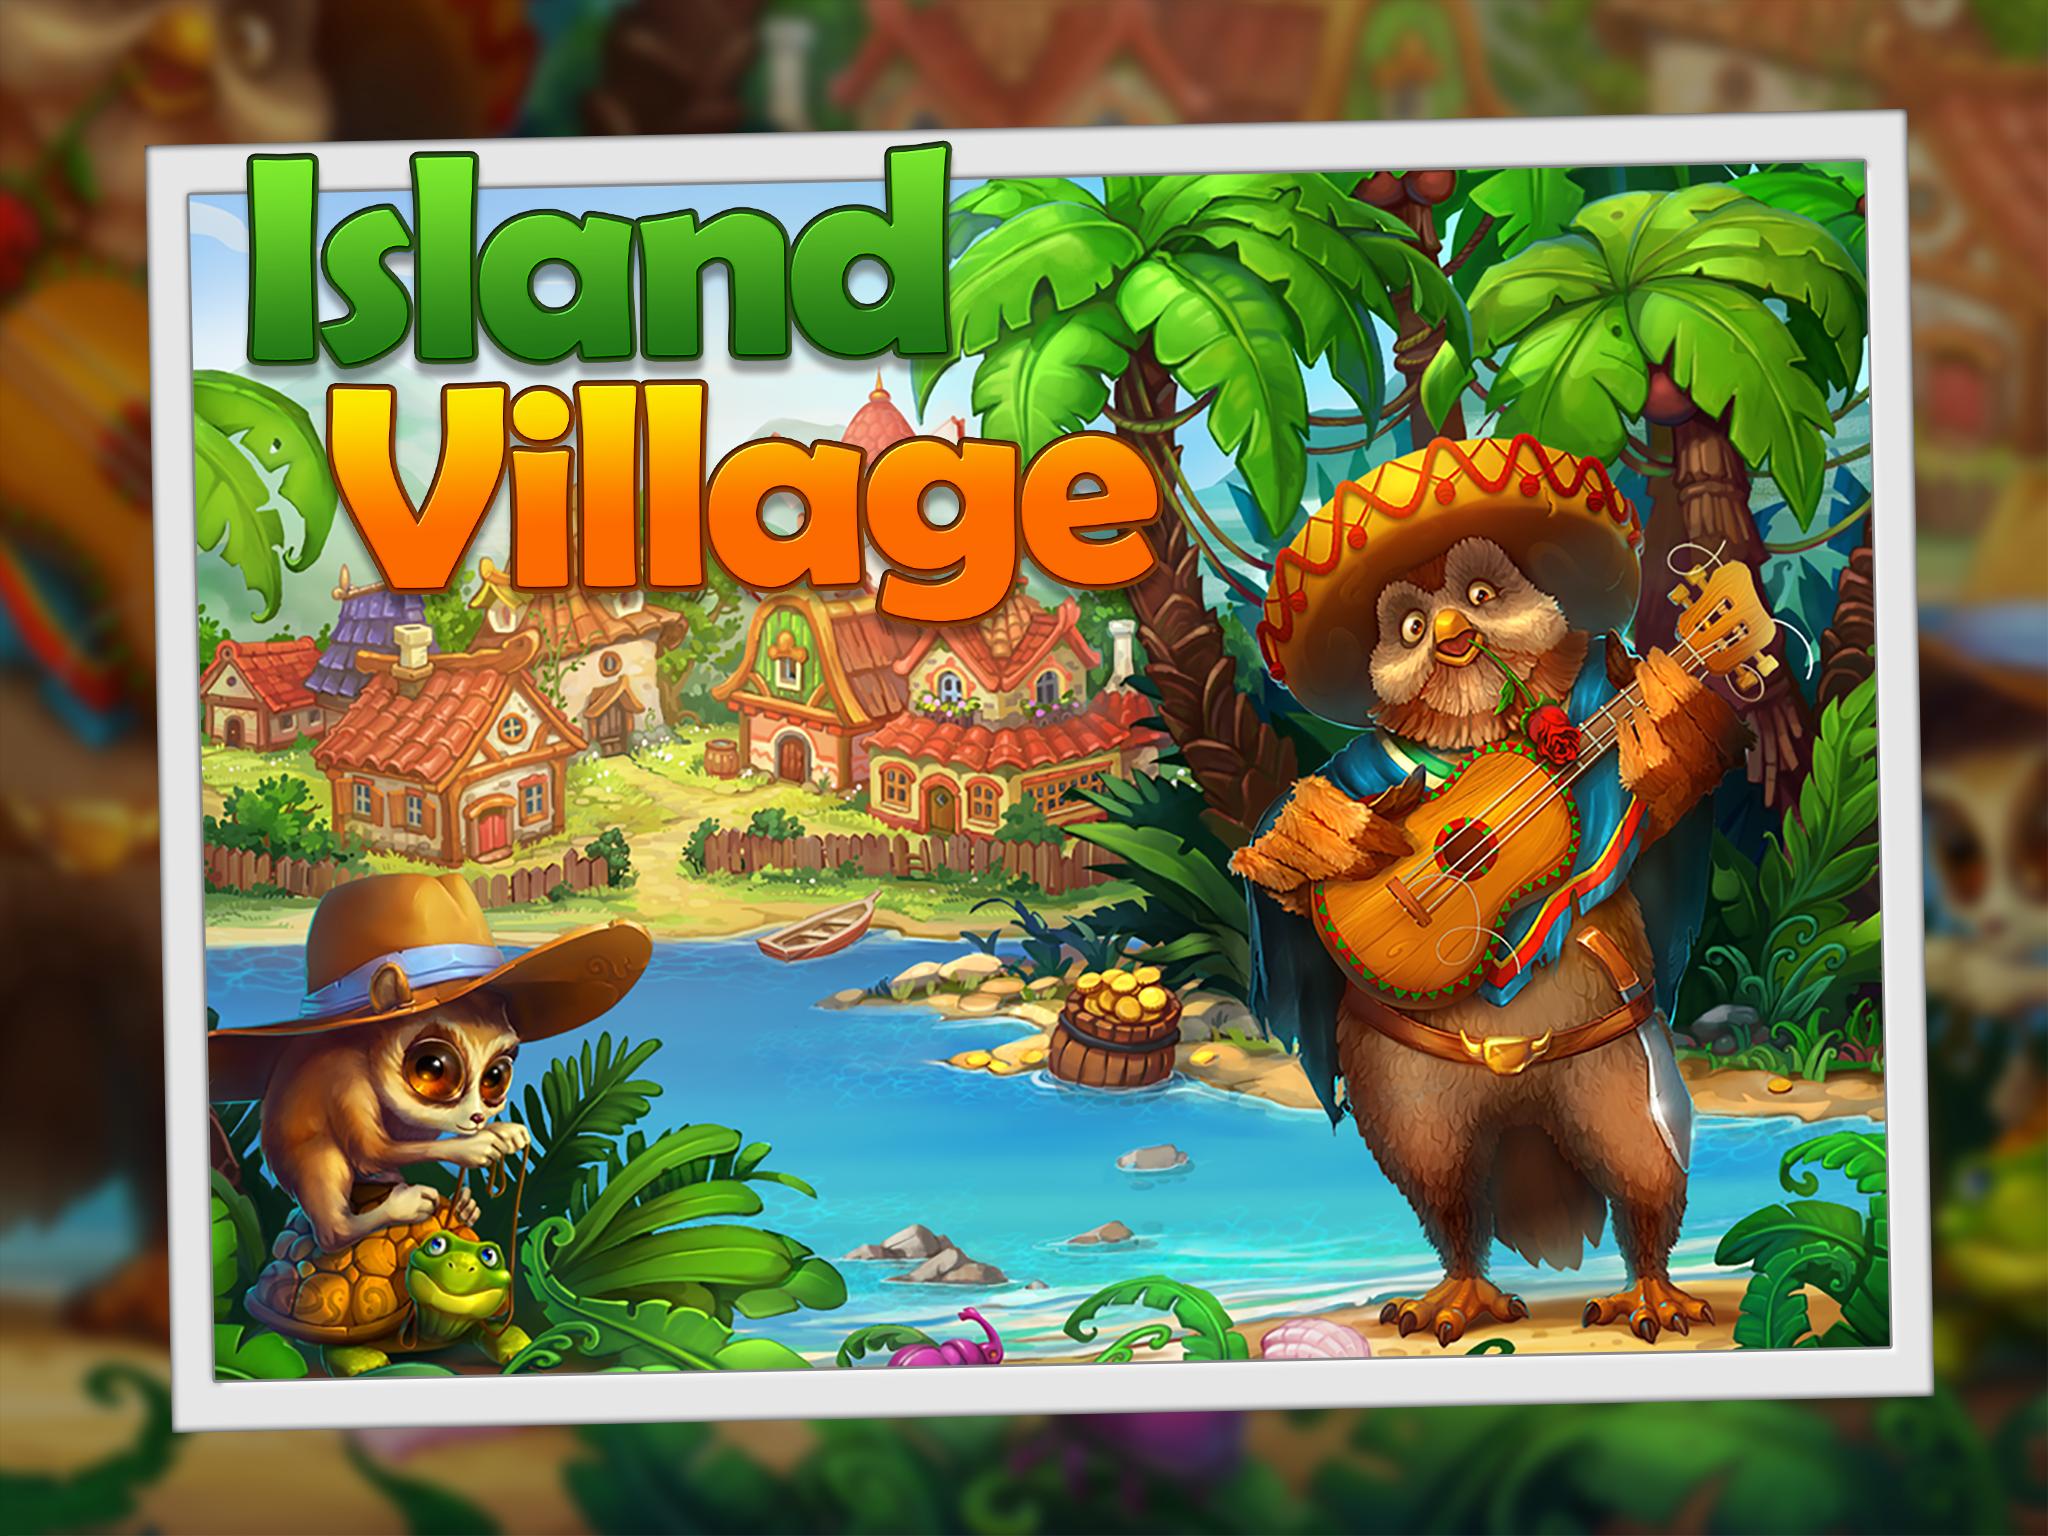 Talking island. Игра остров. Игра Village Island. Village игра на острове. Веселый остров.